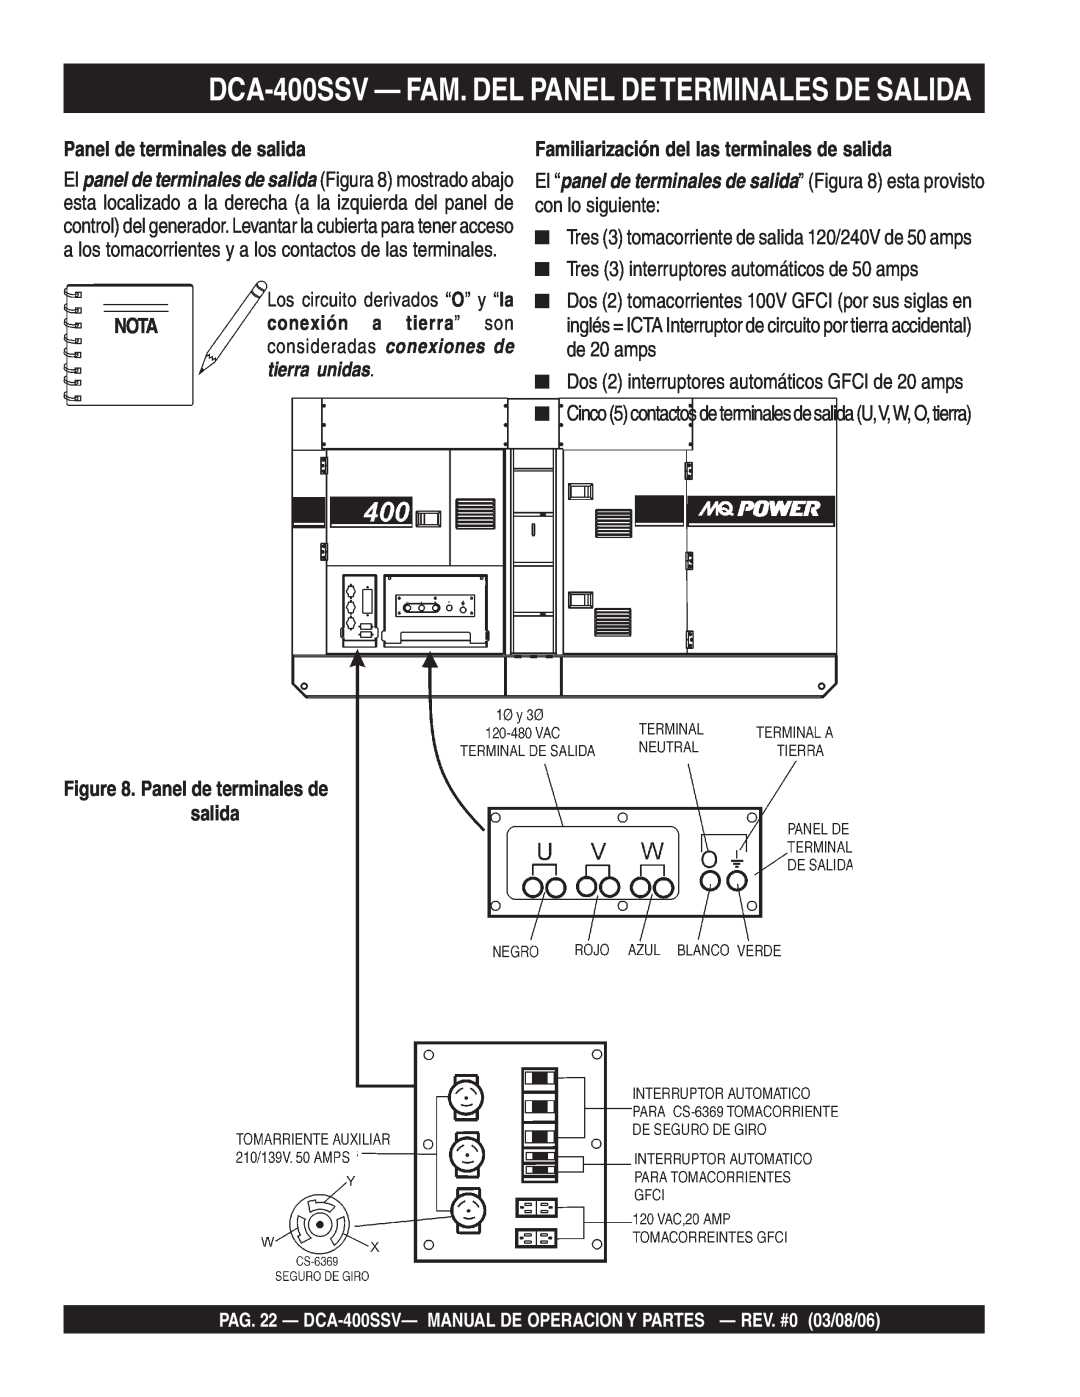 Multiquip operation manual DCA-400SSV— FAM. DEL PANEL DETERMINALES DE SALIDA, Panel de terminales de salida 